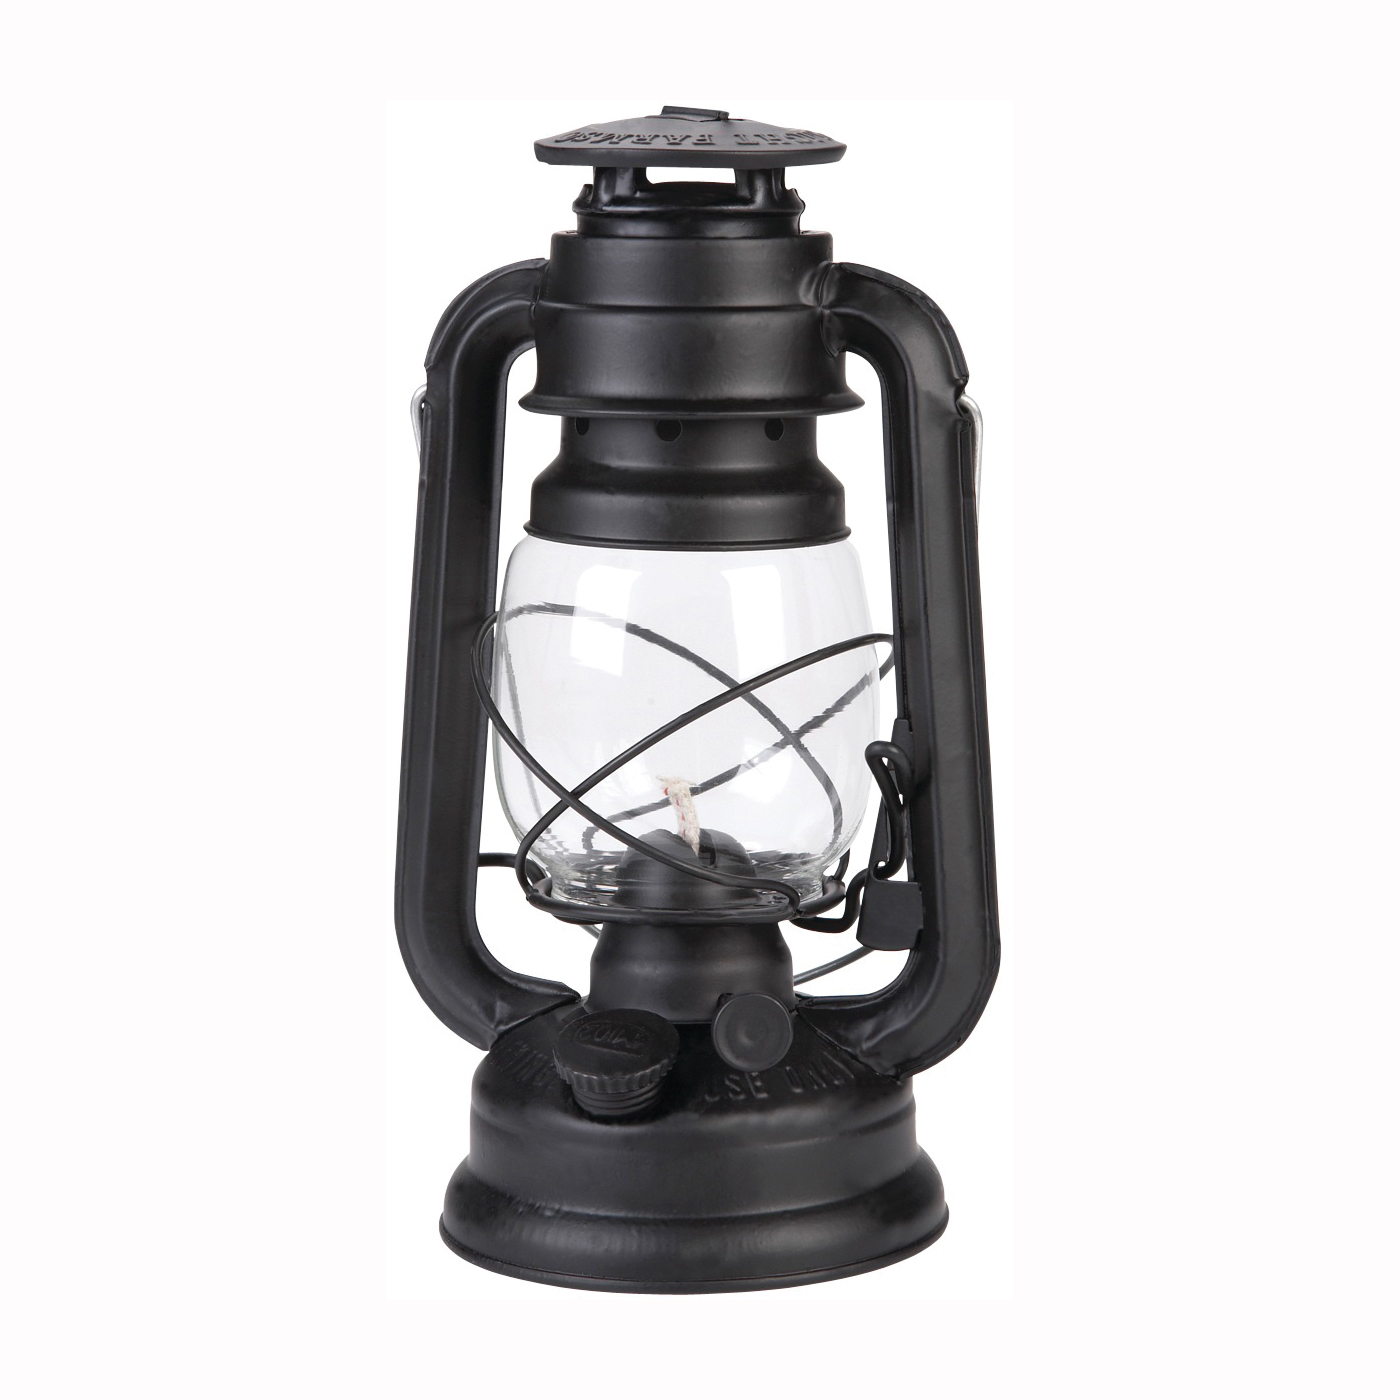 Lamplight 52664 Lantern, 5 oz Capacity, 15 hr Burn Time, Black - 1